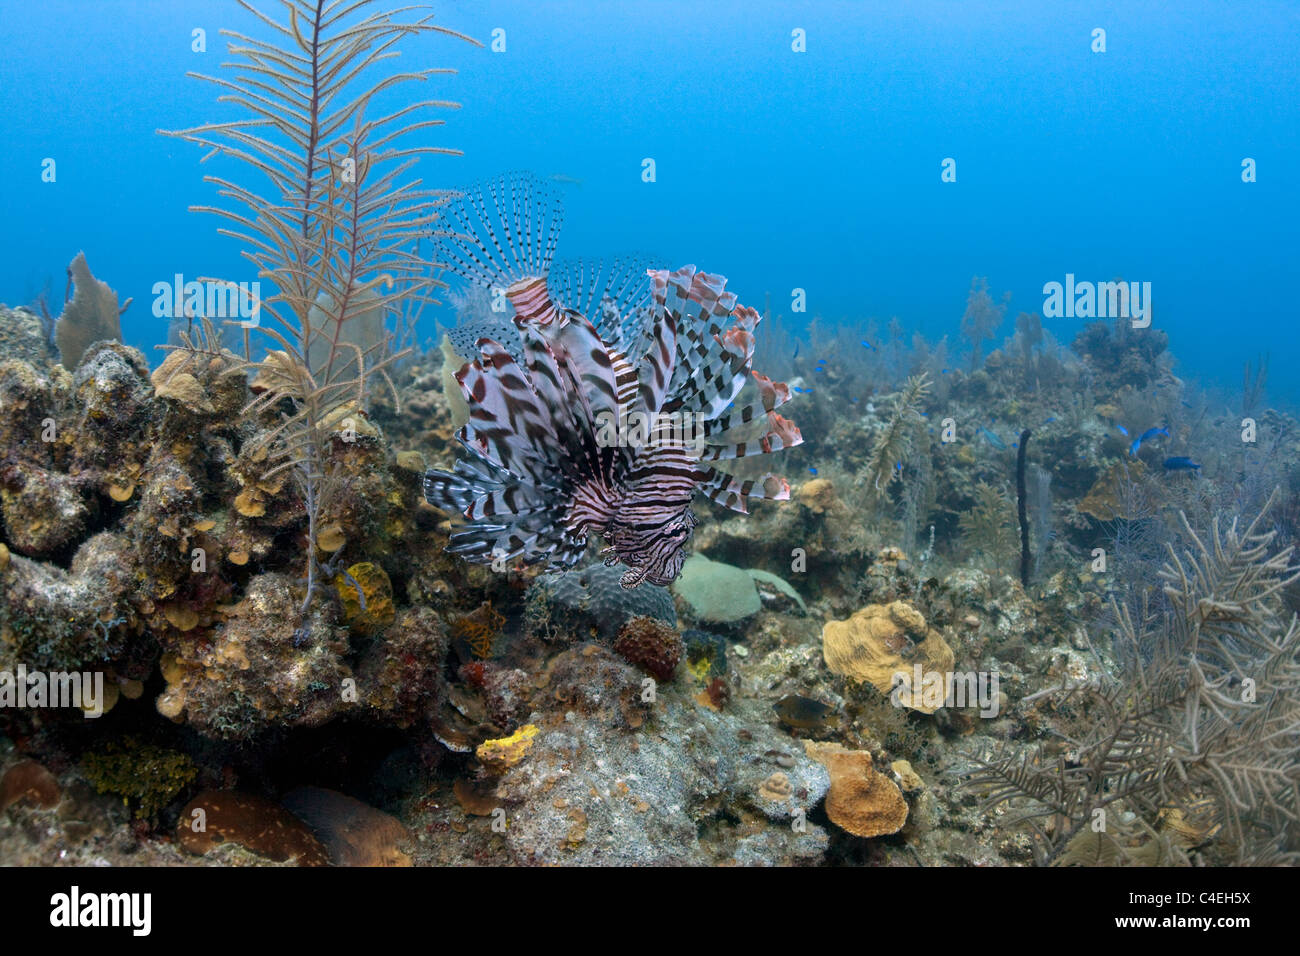 A venomous lionfish is an introduced species at Jardines de la Reina off the coast of Cuba. Stock Photo